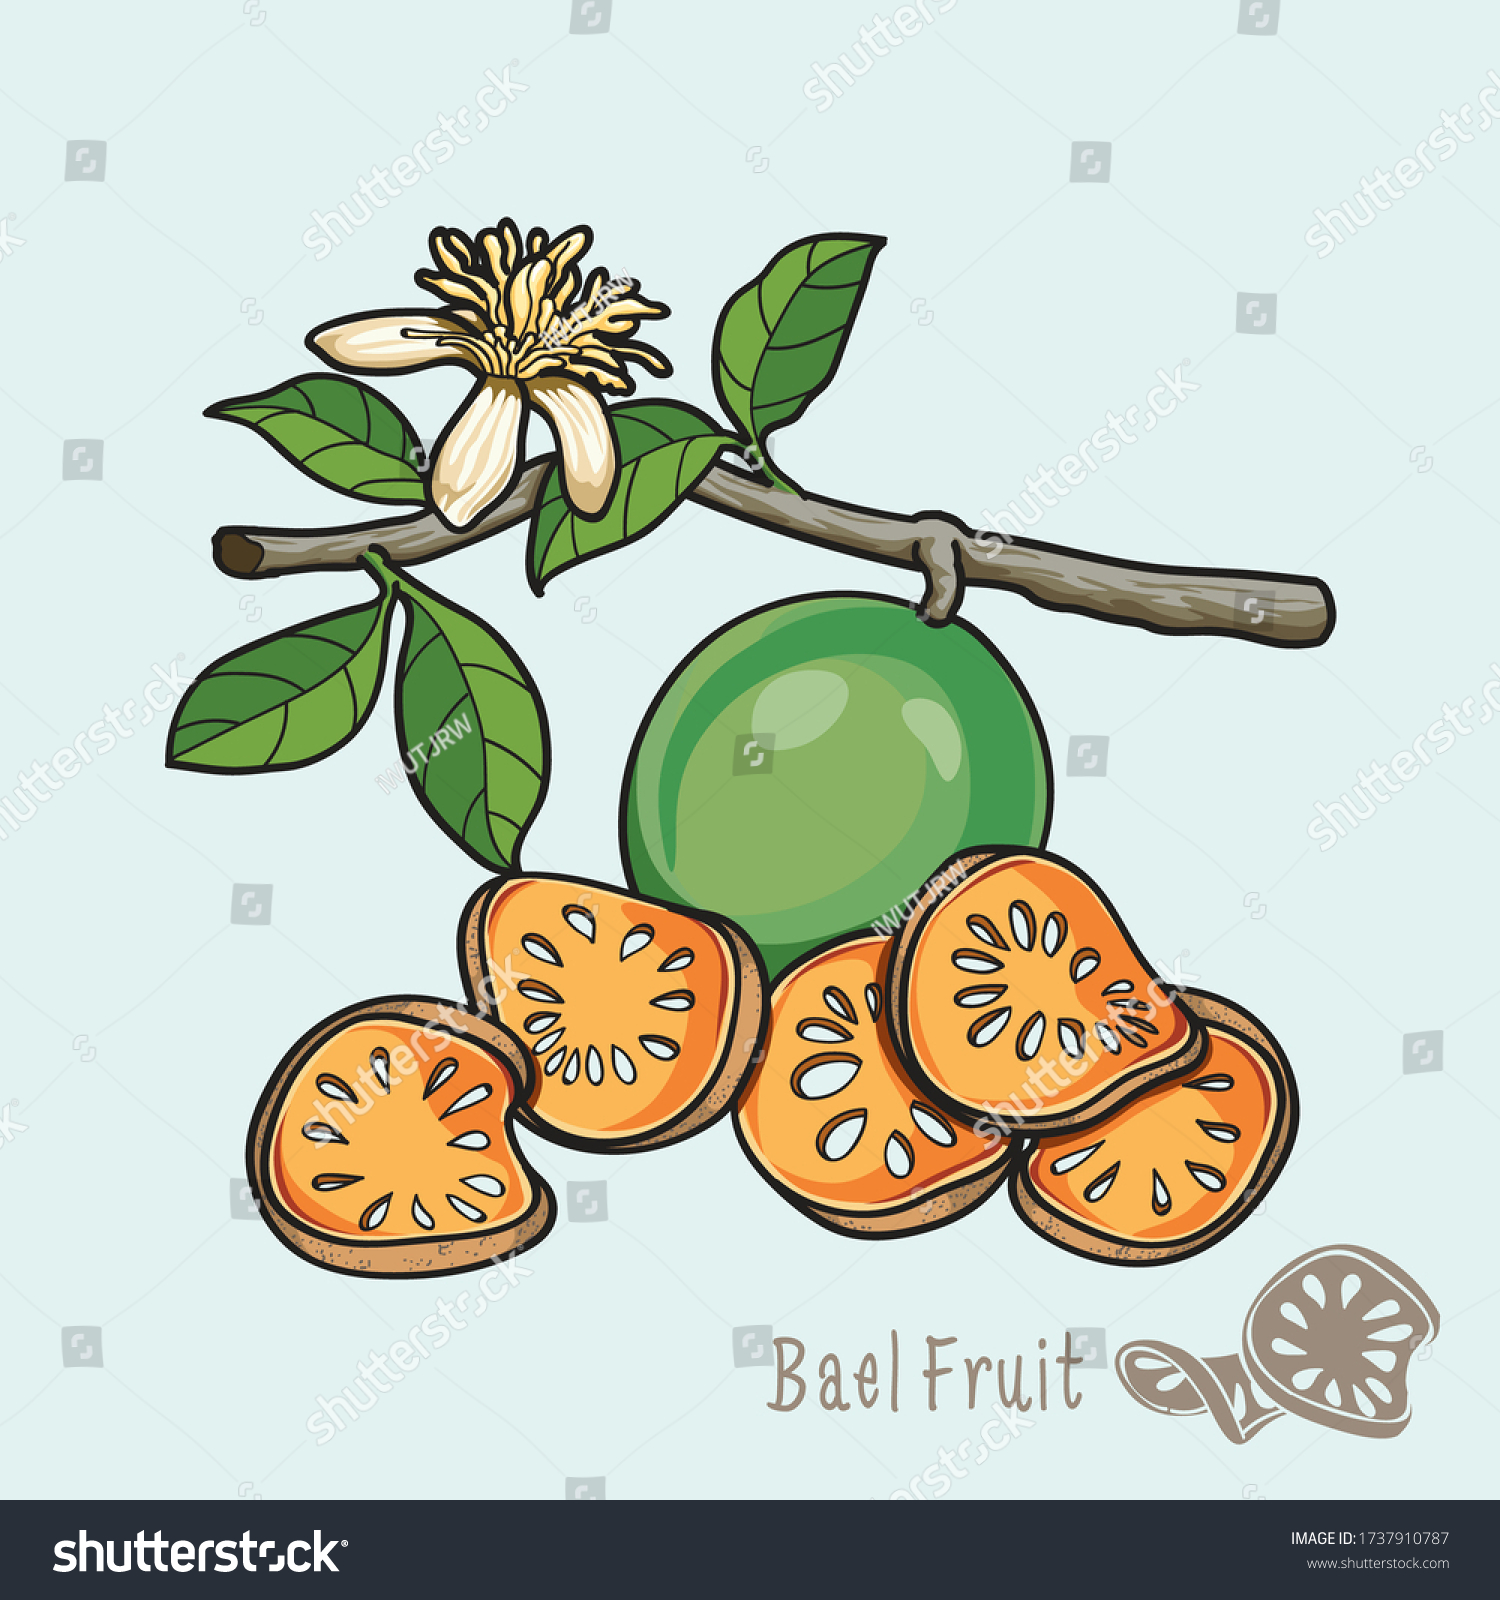 66 Bael fruit drink Stock Illustrations, Images & Vectors Shutterstock